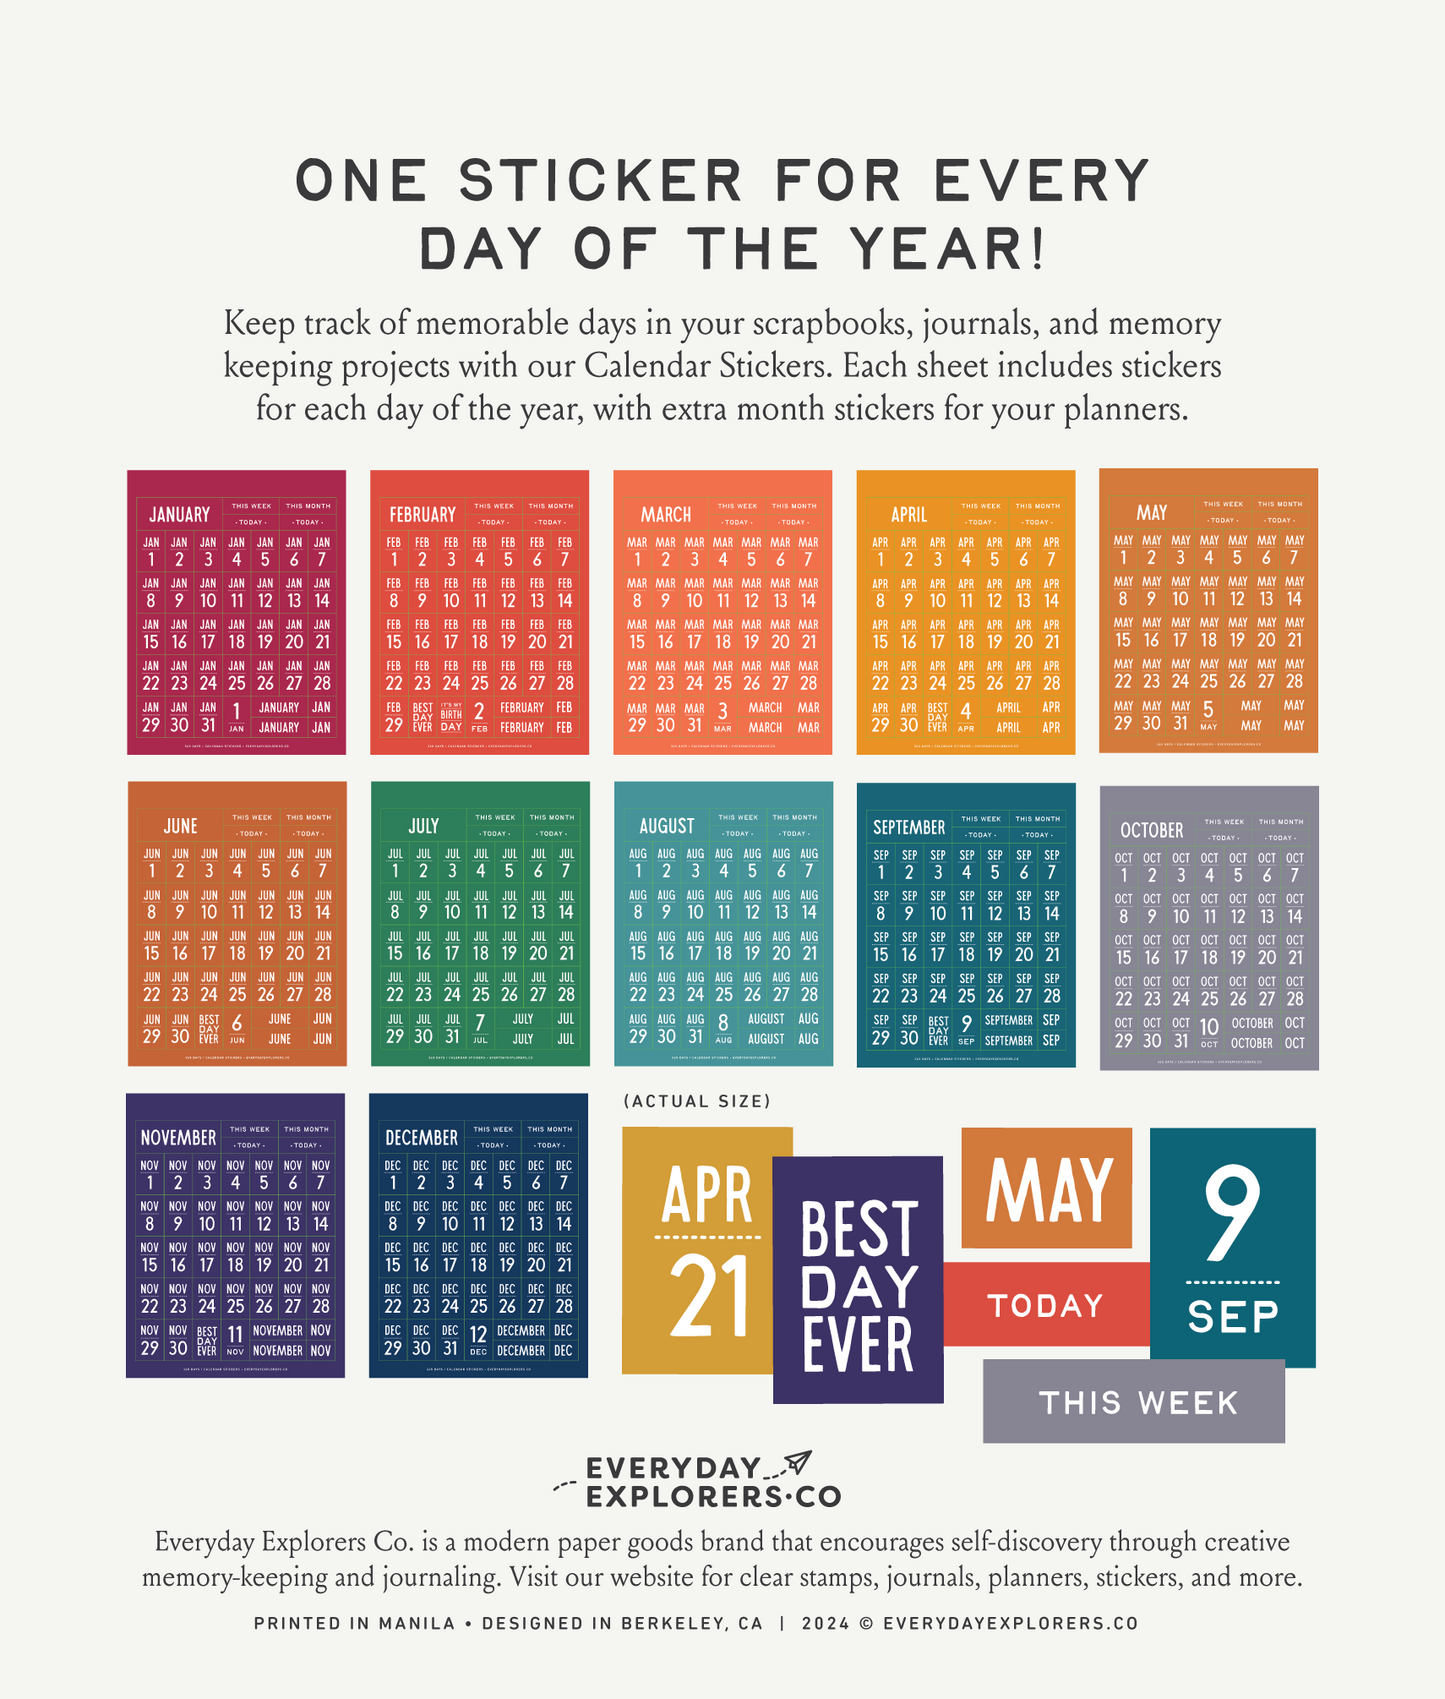 365 Days - Calendar Sticker Book (Bright Colors)